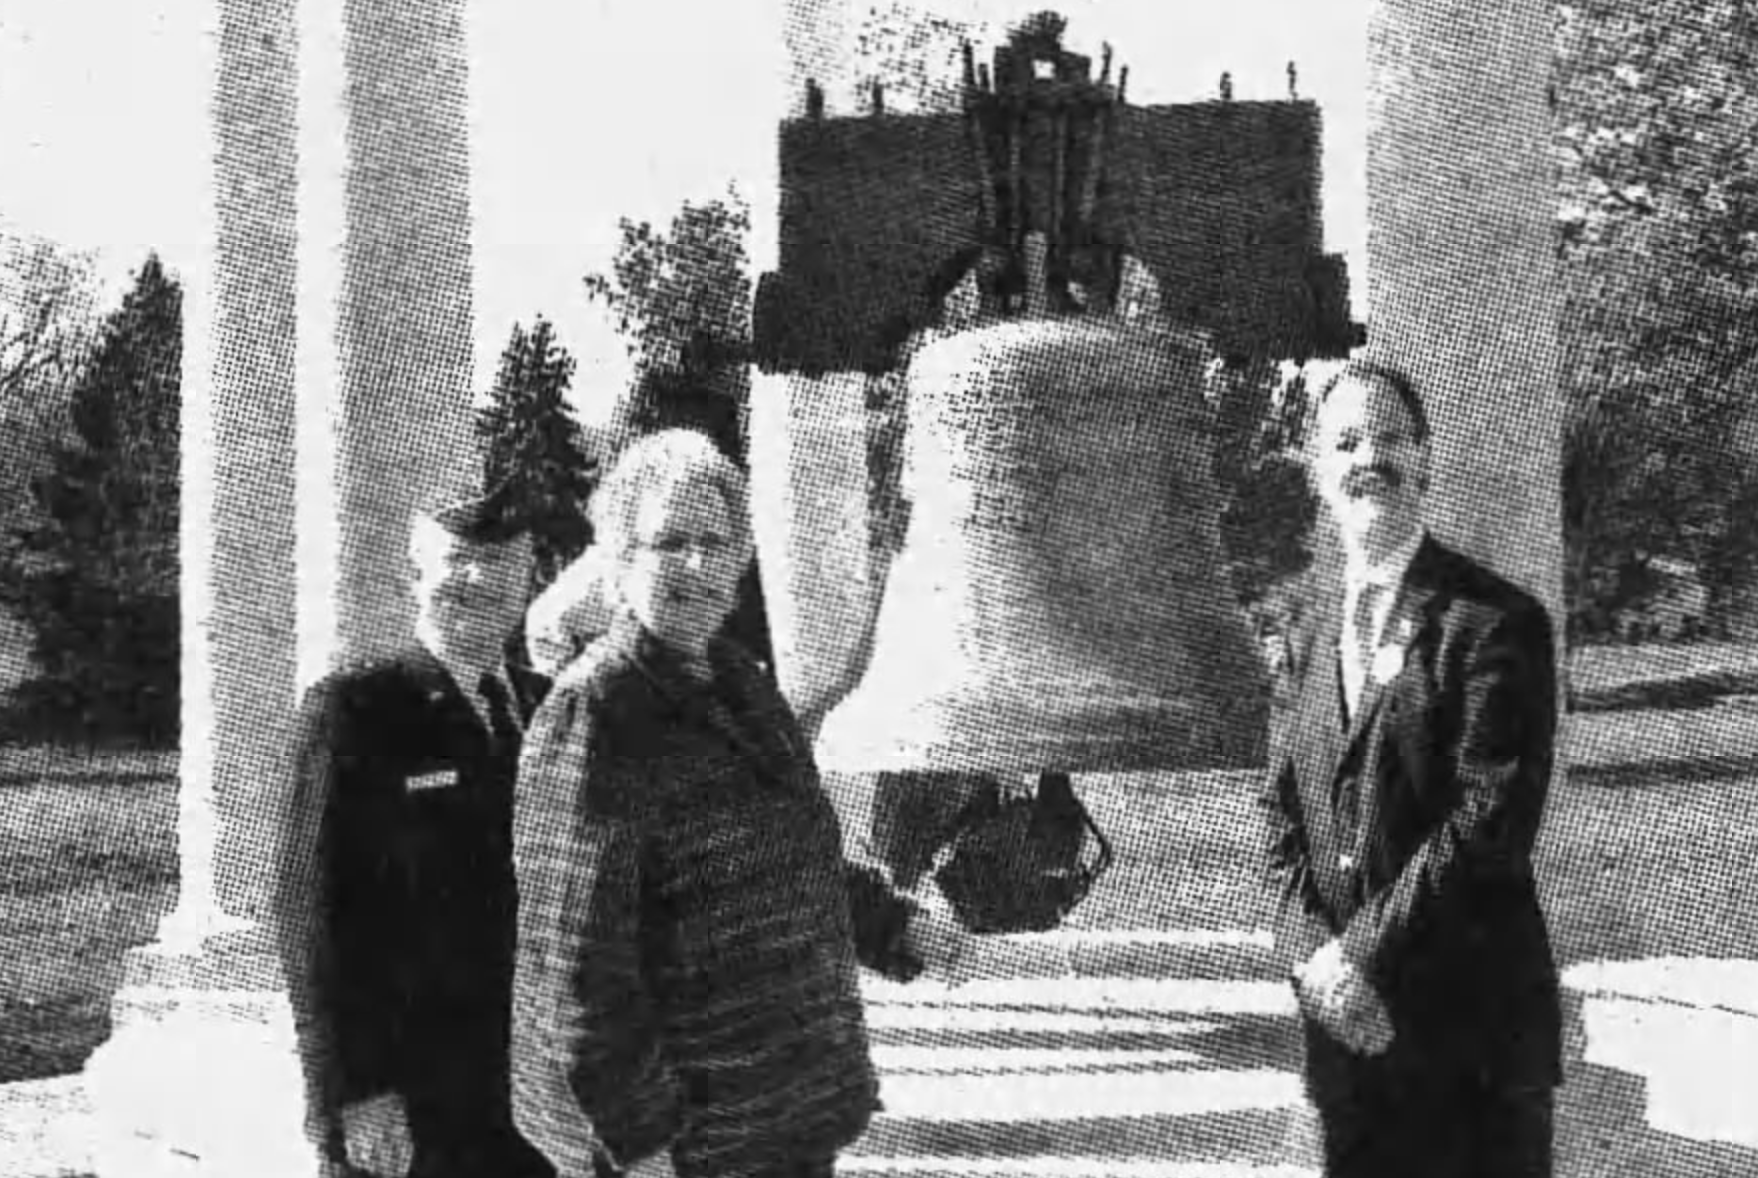 Lincoln Nebraska Liberty Bell Replica